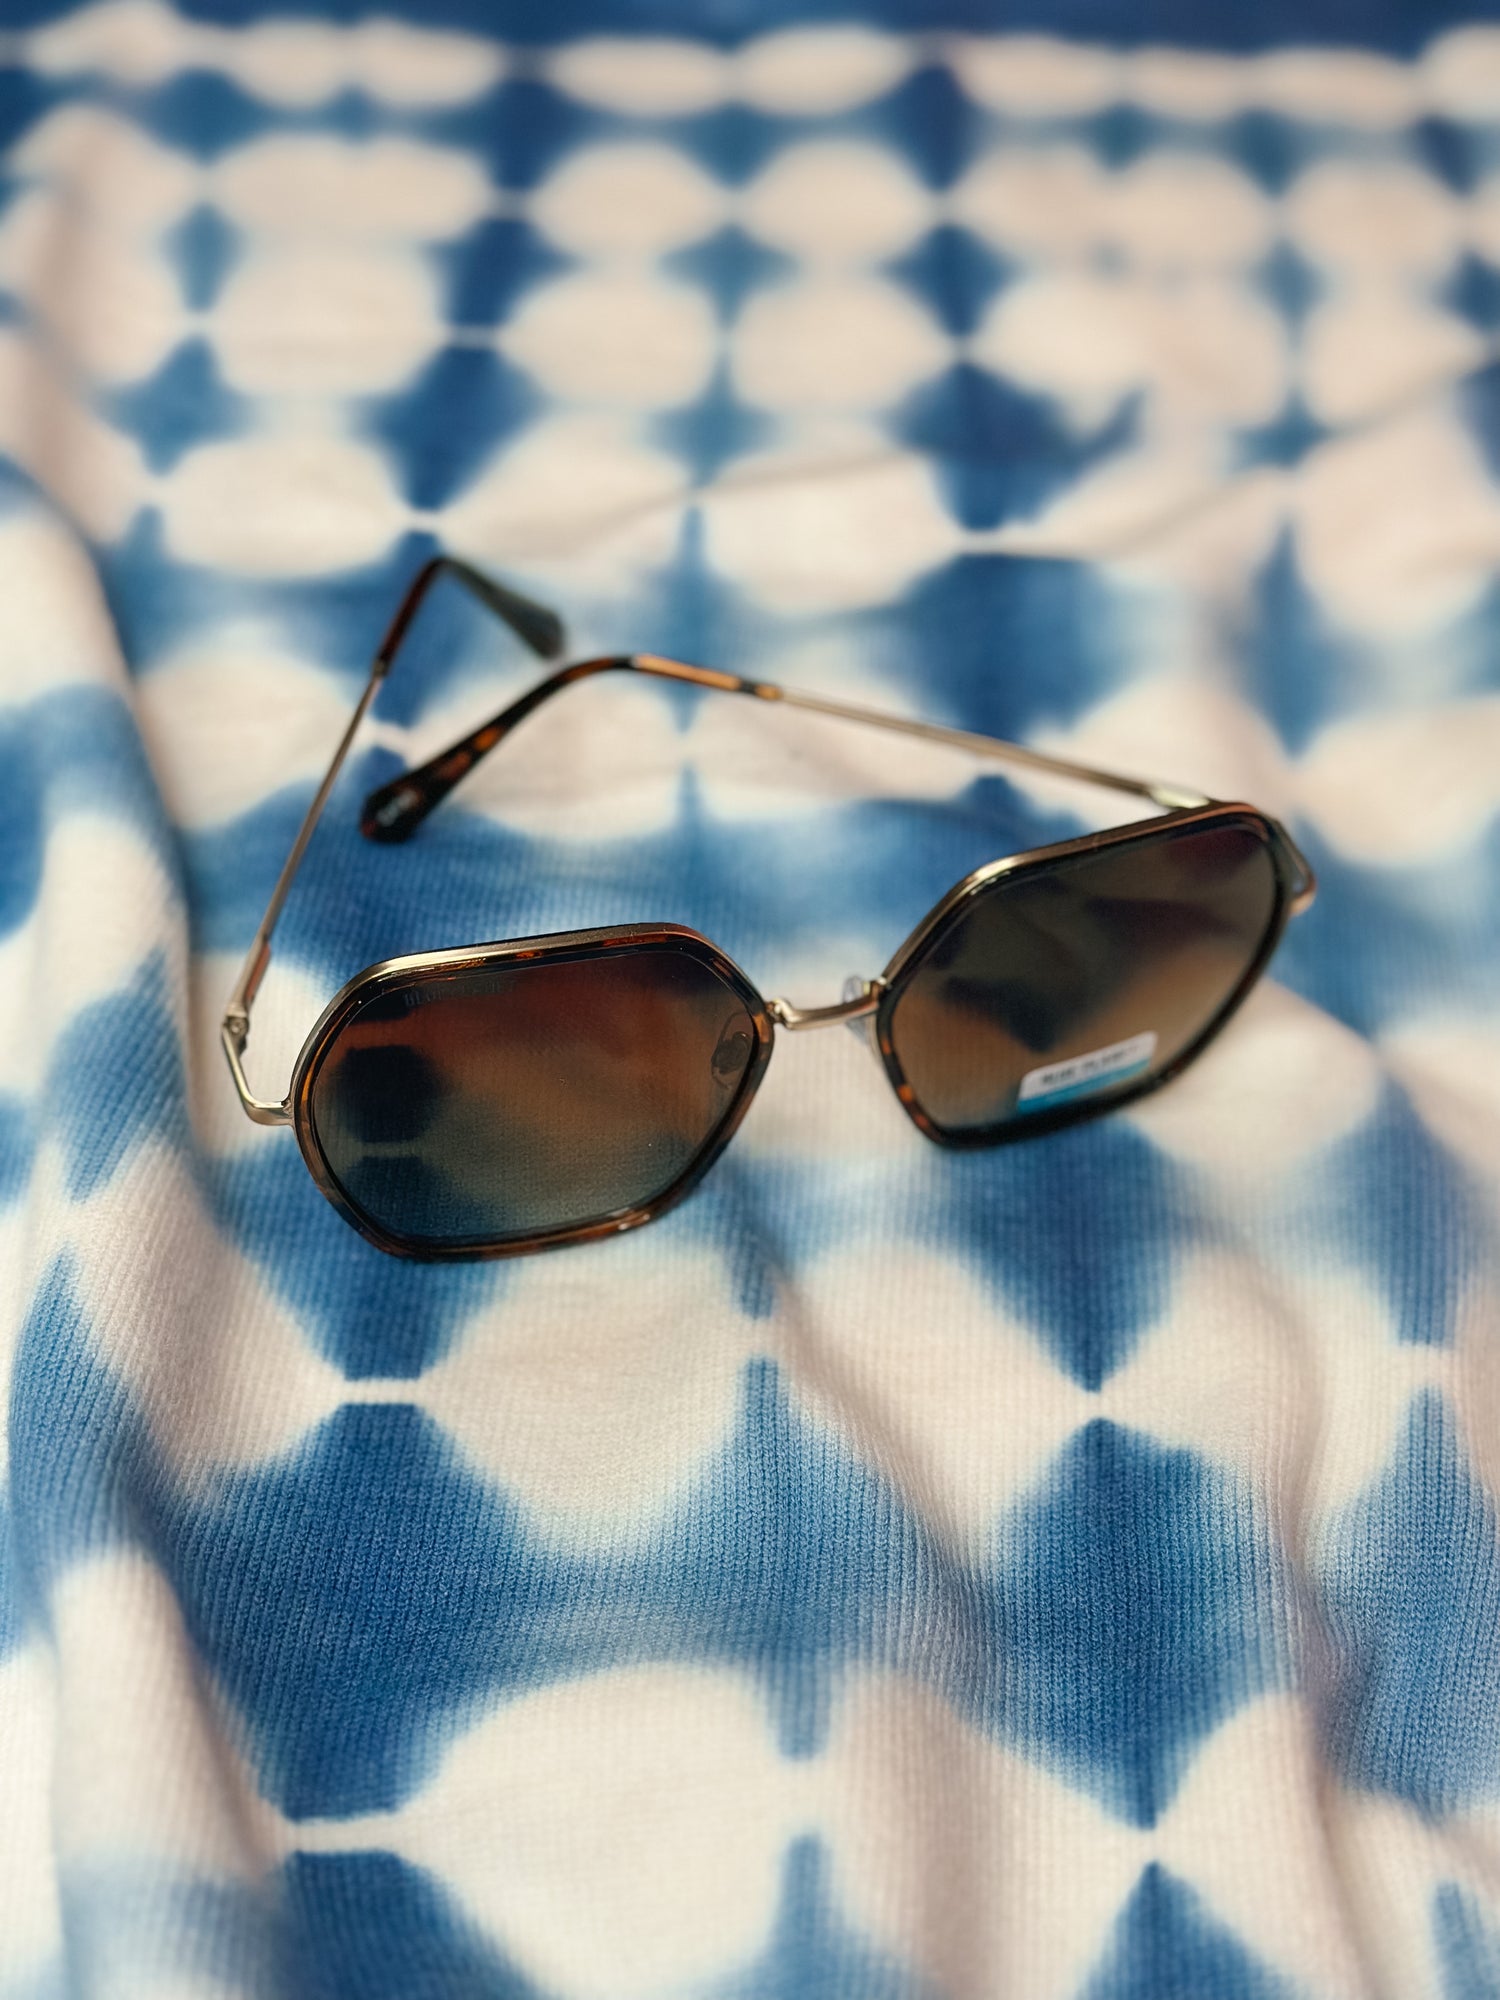 The Addyson Polarized Brown Lens Sunglasses